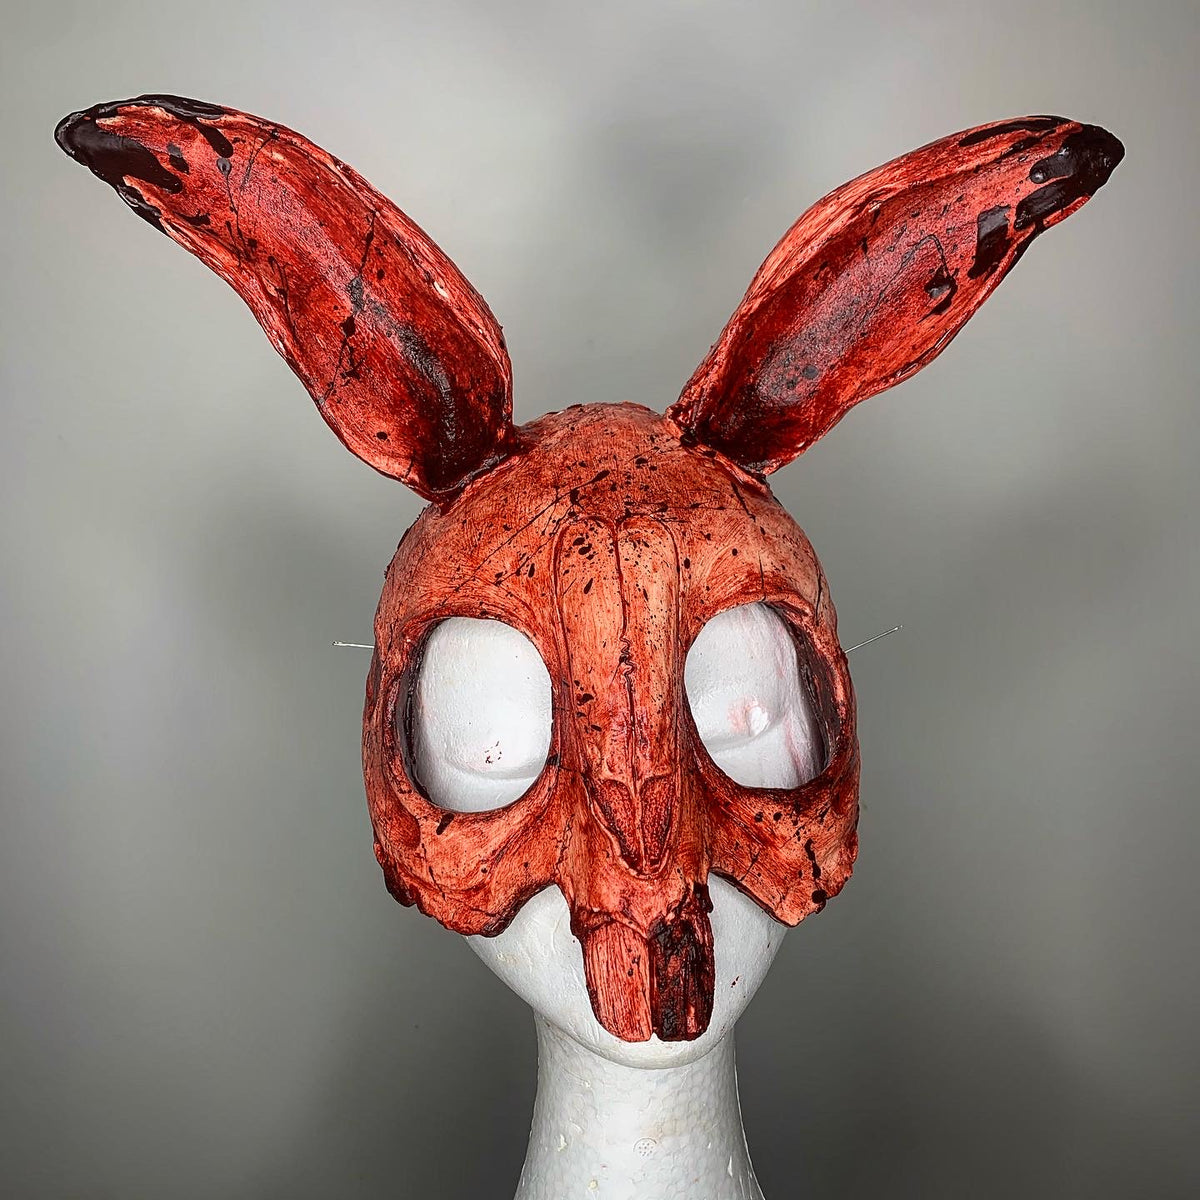 Scary Bunny Mask